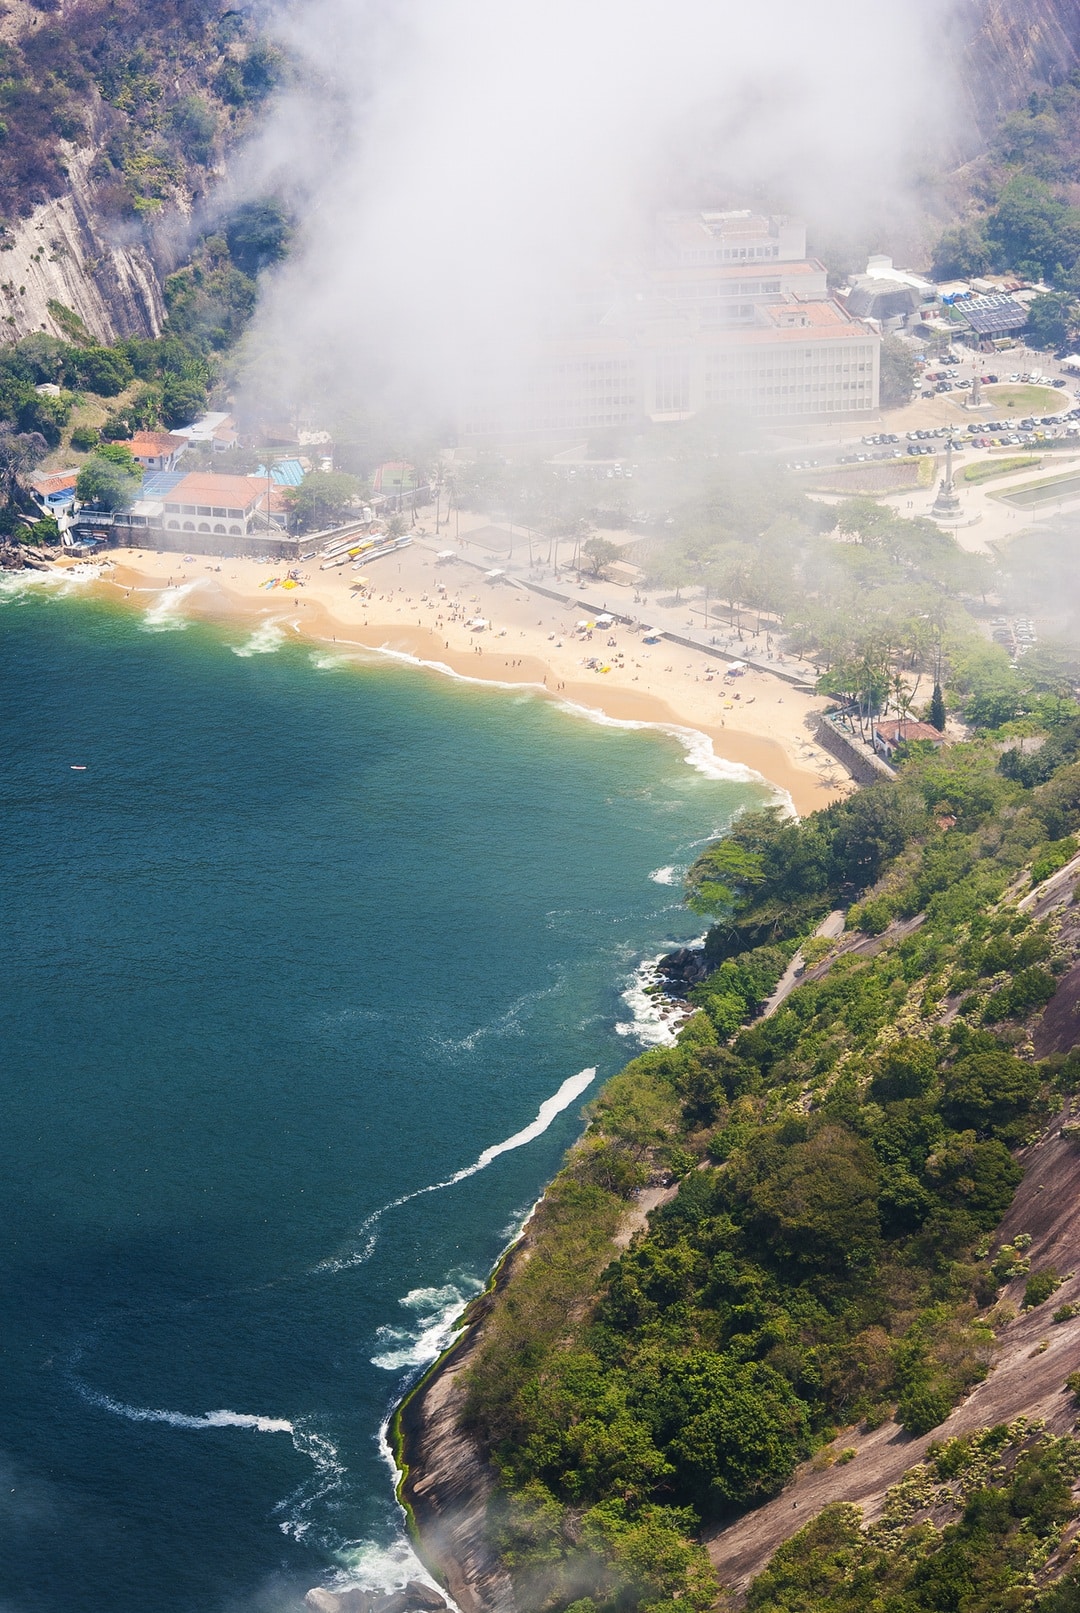 Rio de Janeiro's Guanabara Bay in all of it's original glory. Photo courtesy of unsplash.com